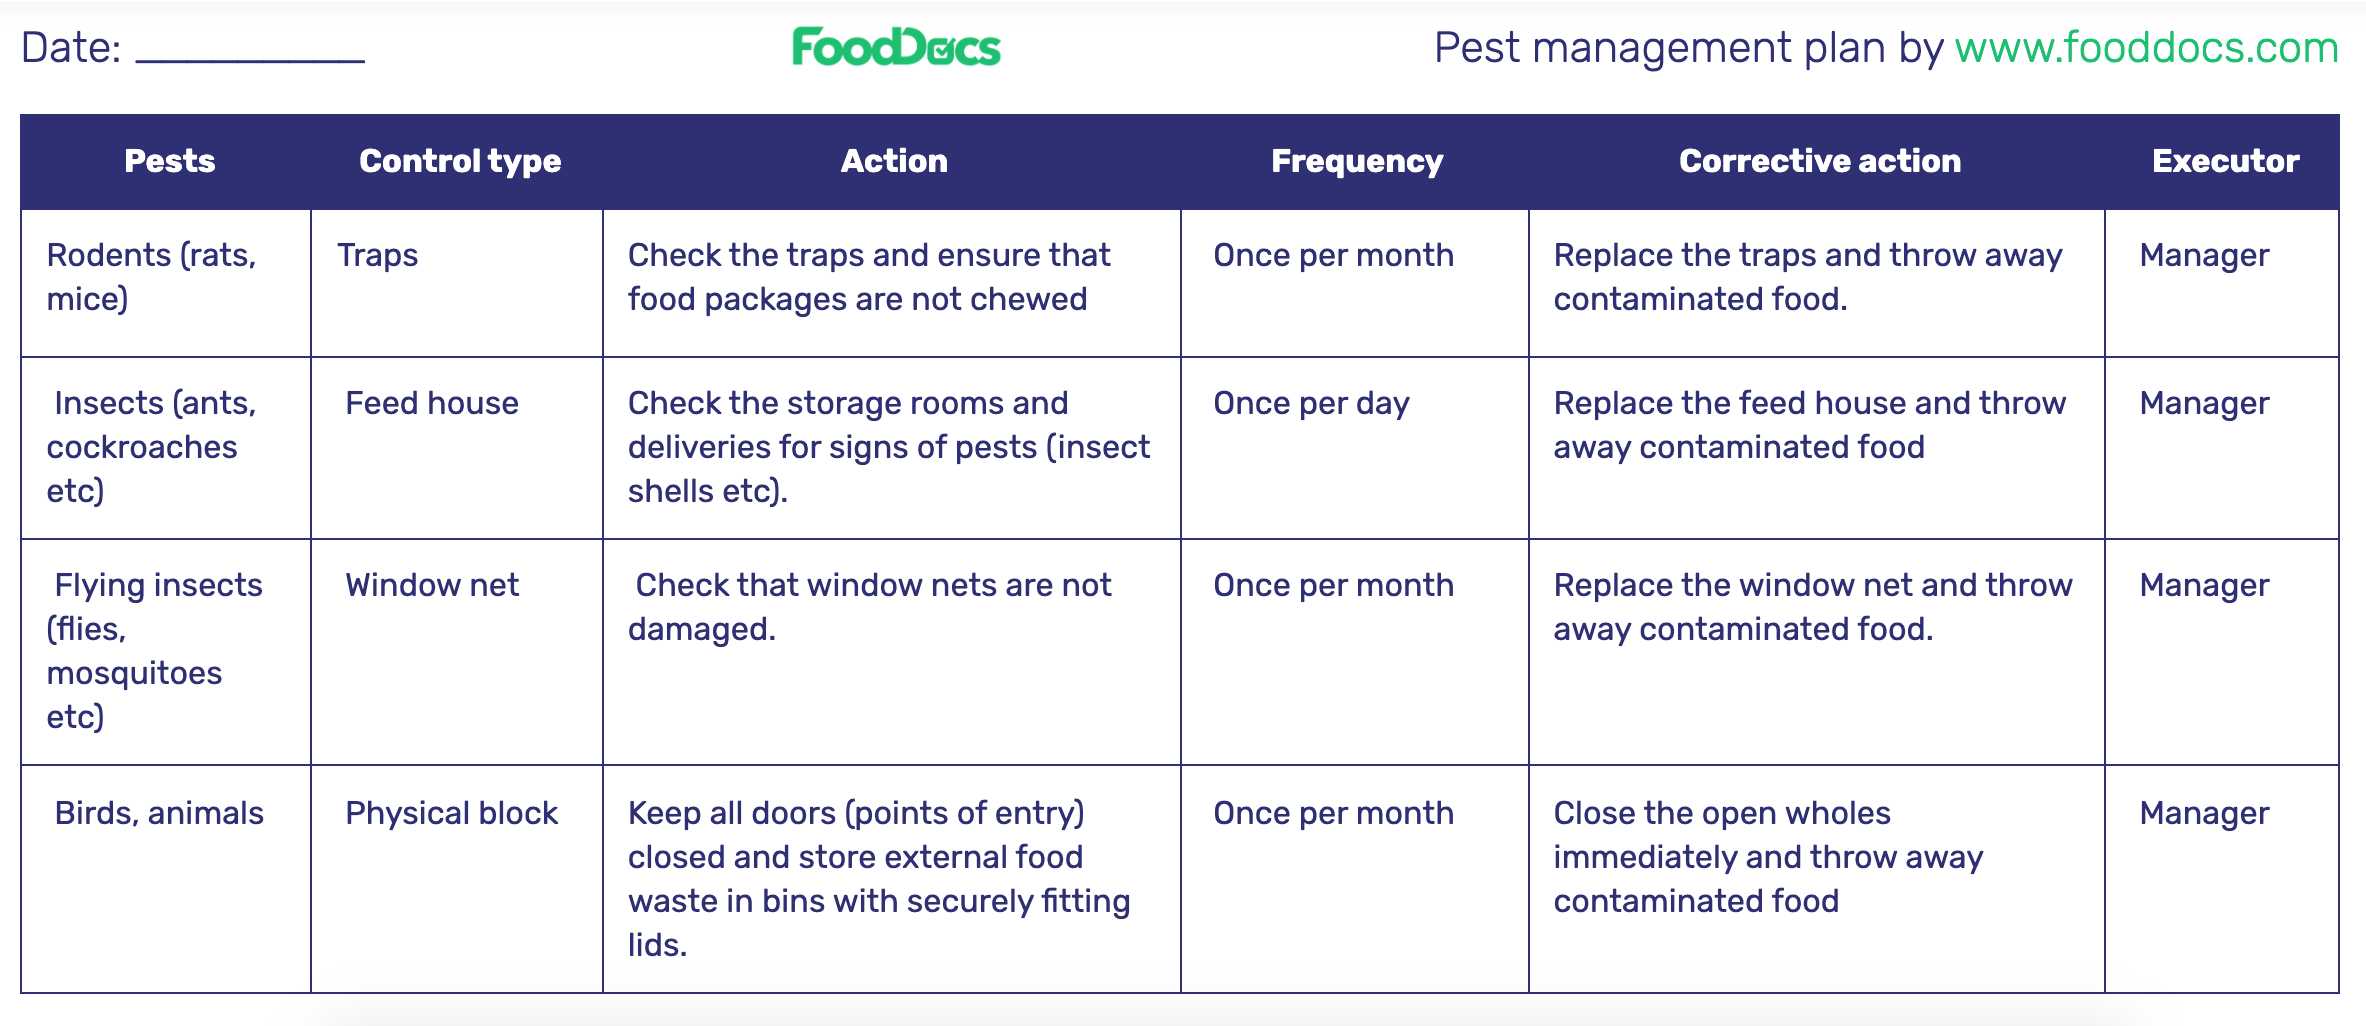 Pest Management Plan Download Free Template